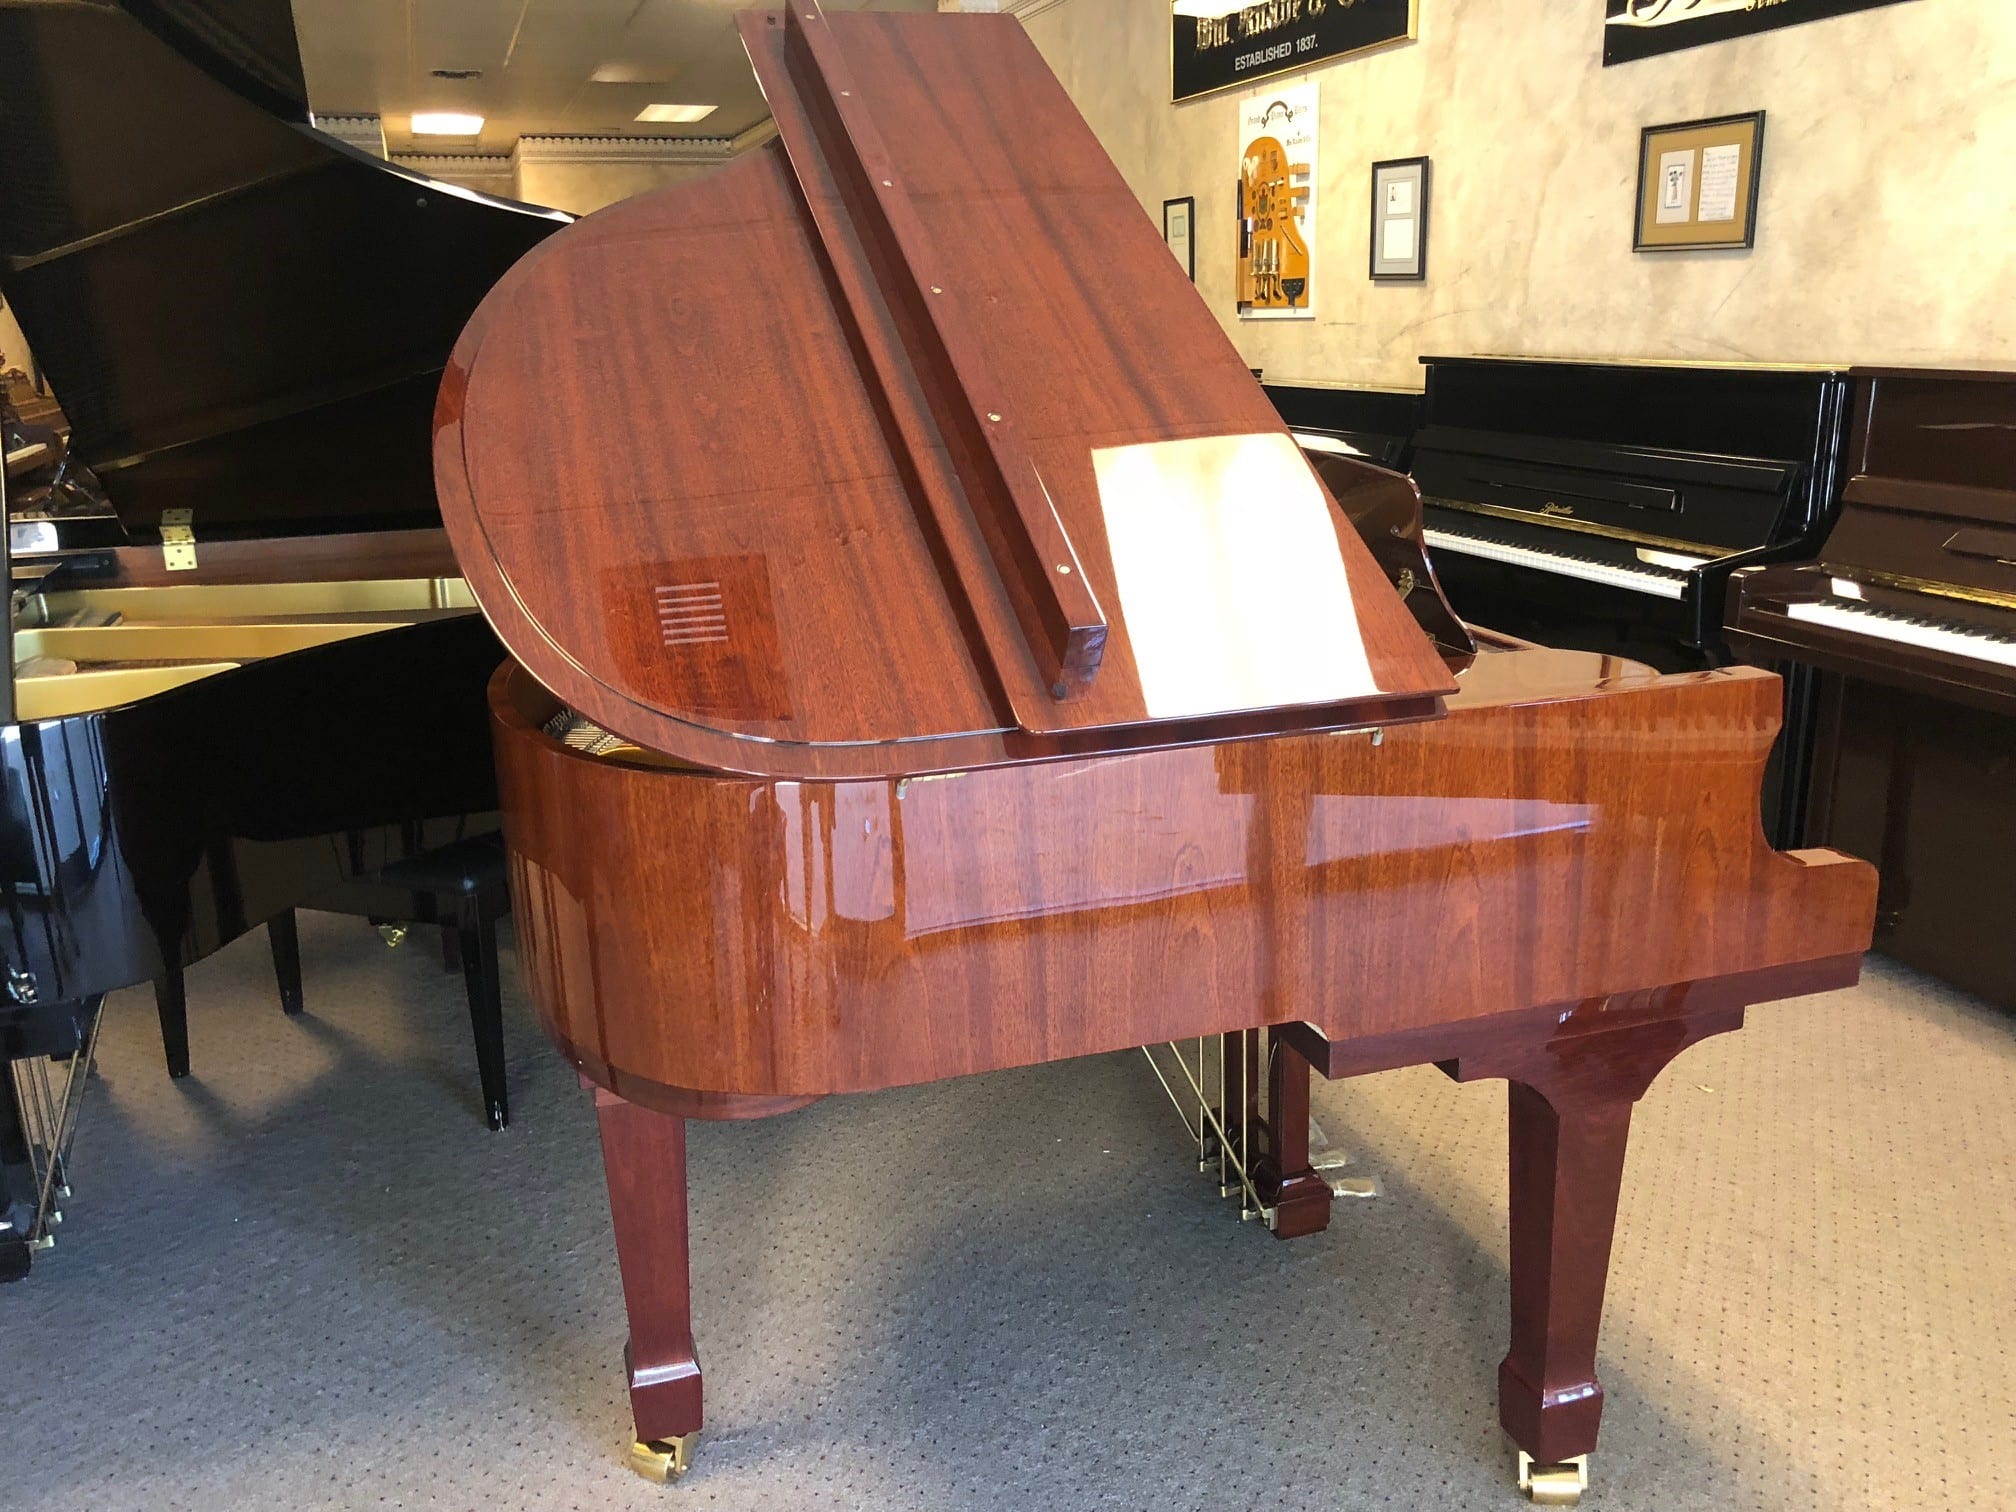 Hallet & Davis Pianos for Sale